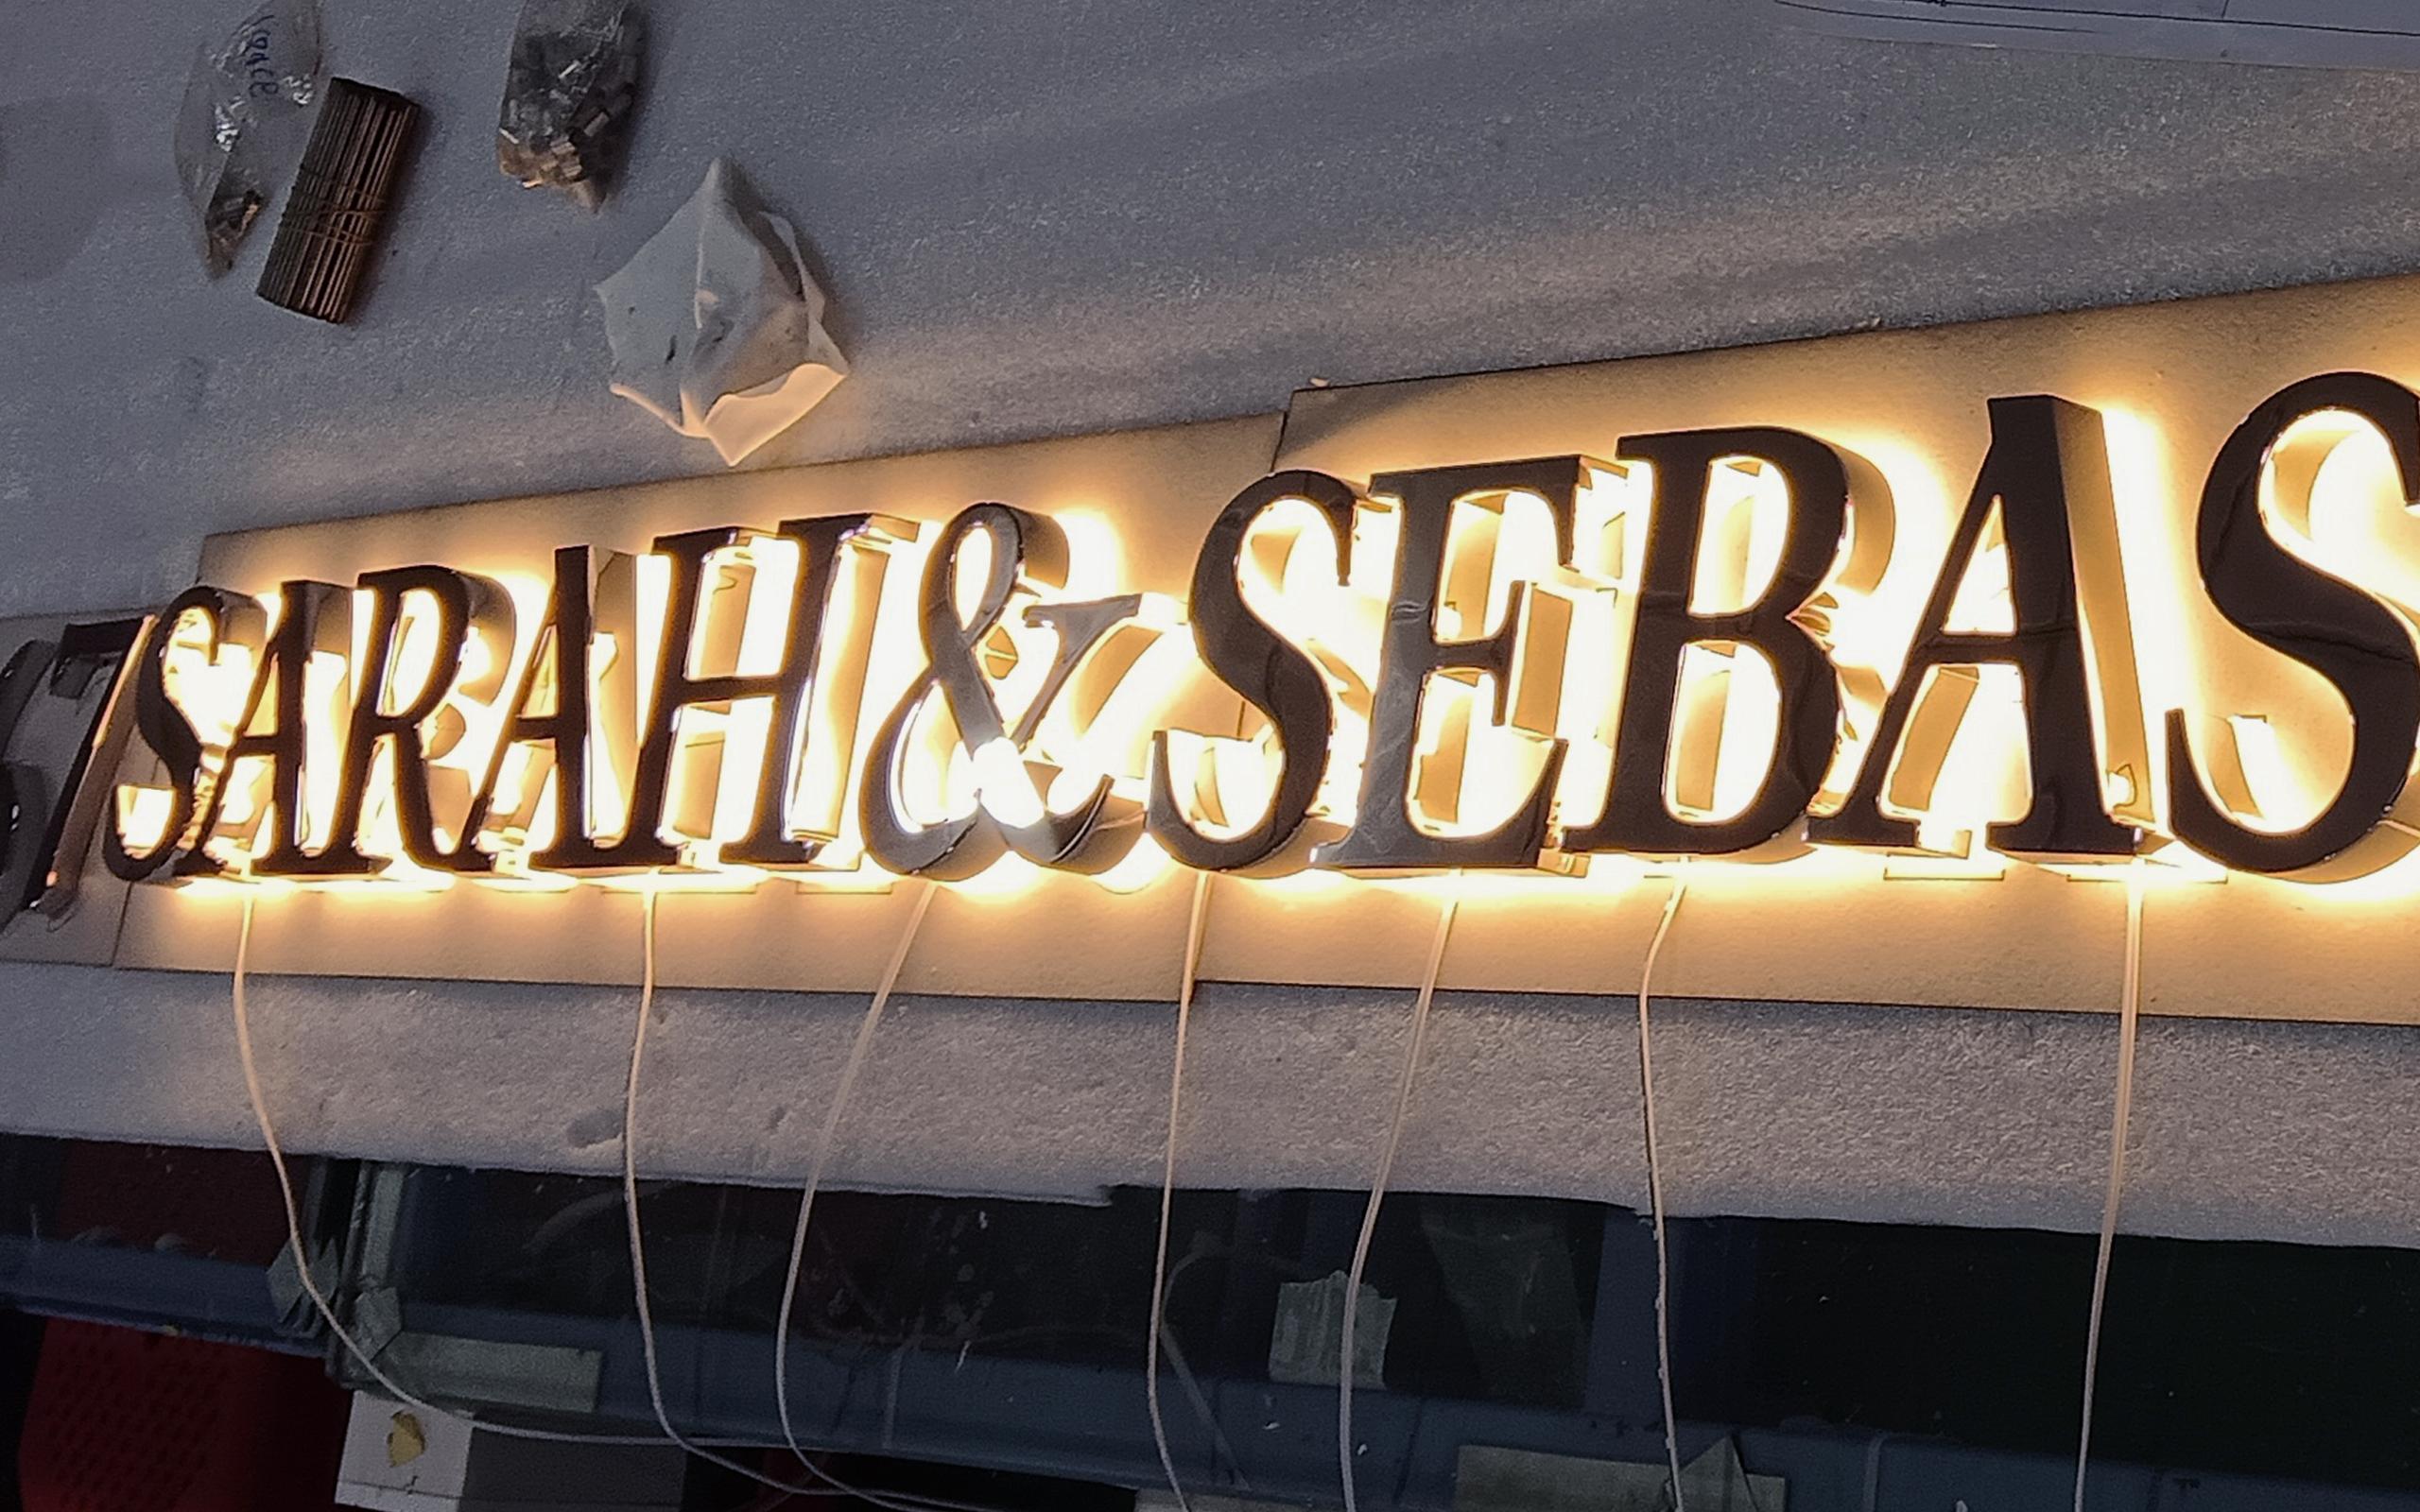 Sarah & Sebastian illuminated Signage 